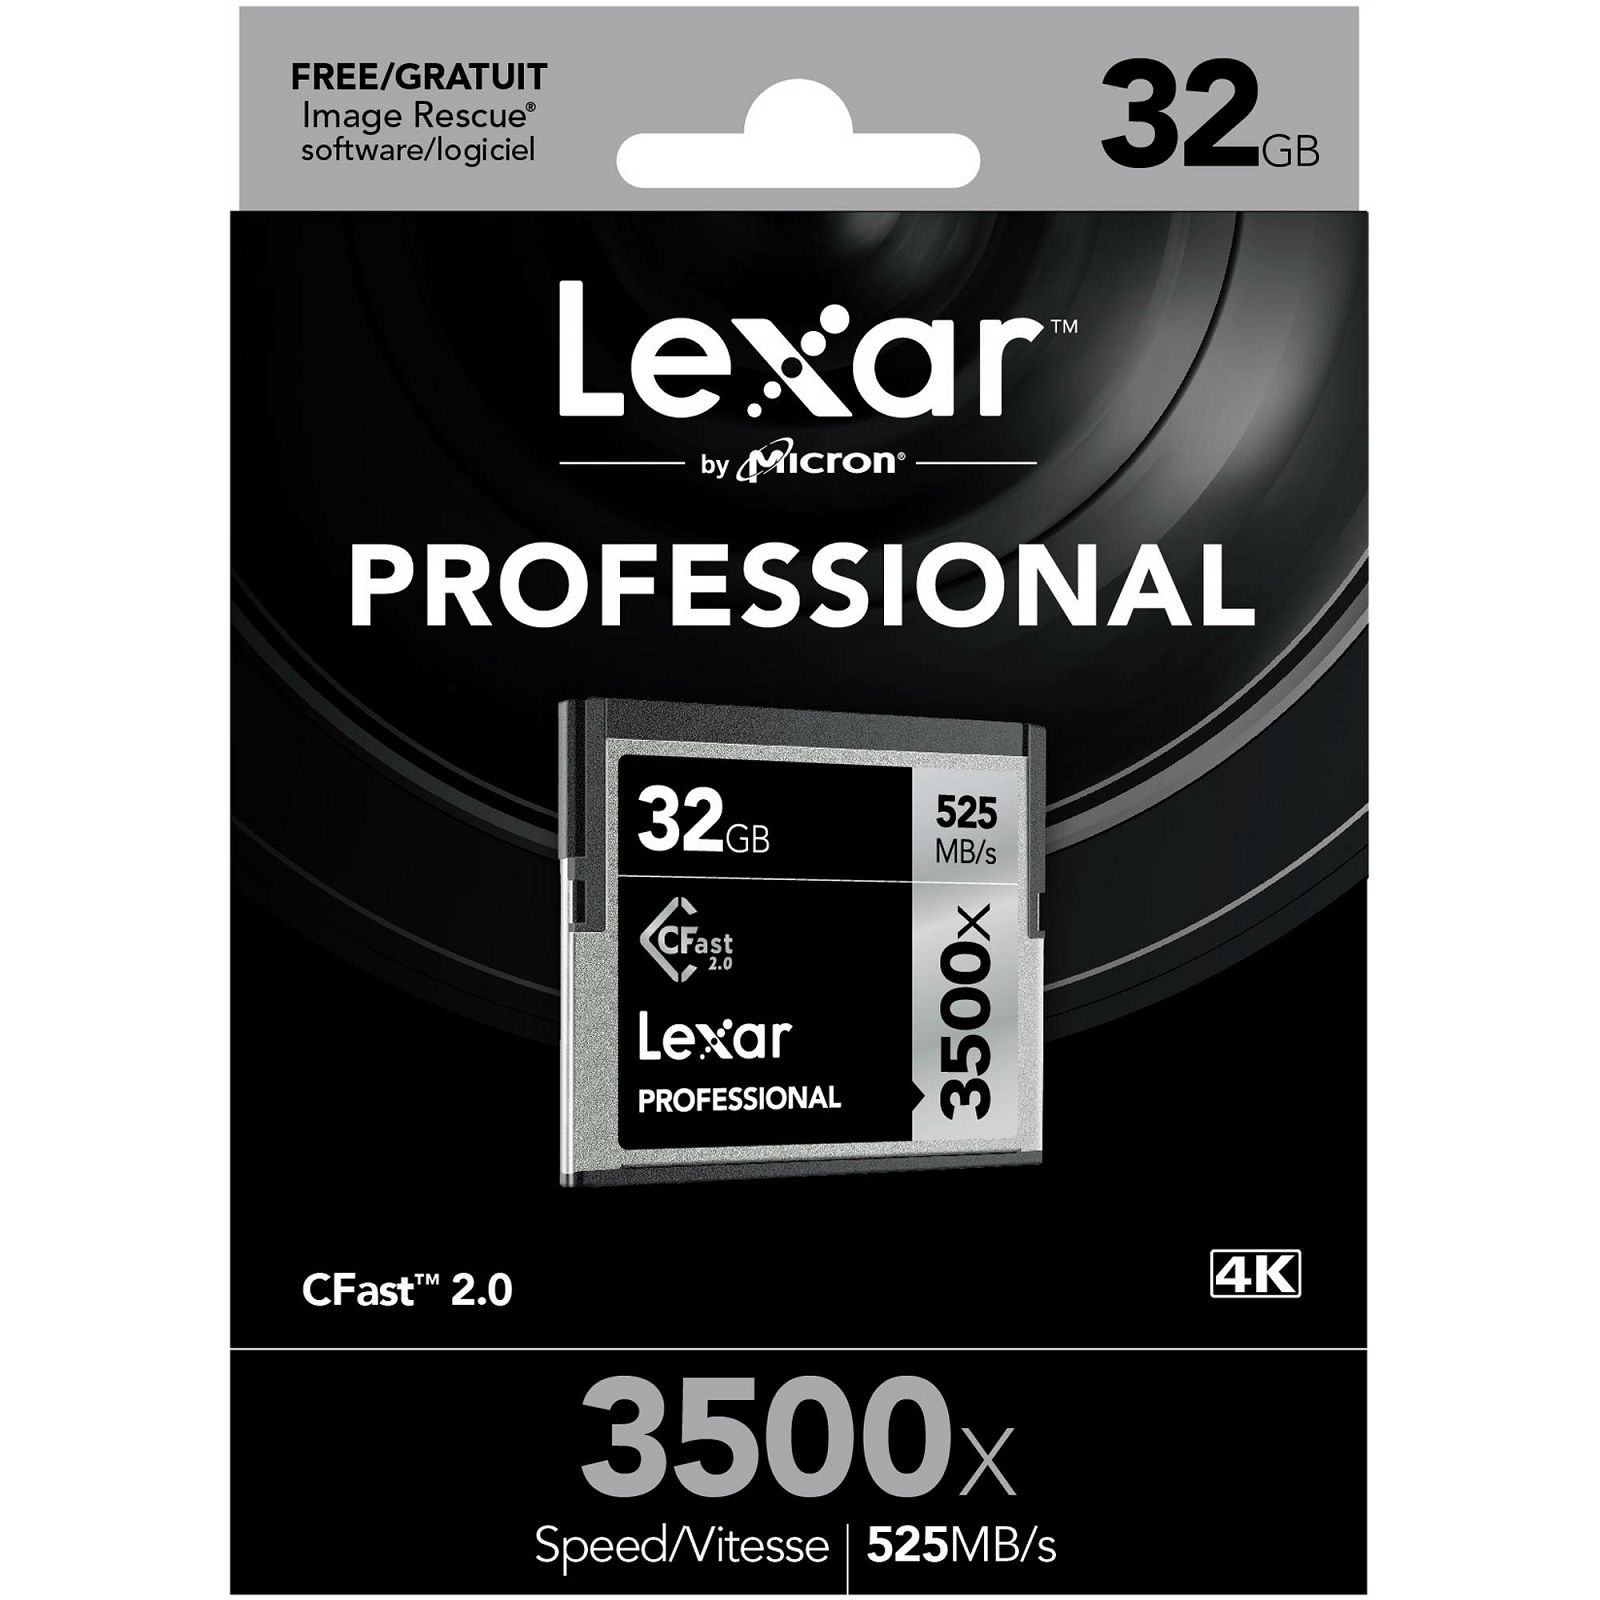 Lexar 32GB 3500x Pro CFast 2.0 Professional memorijska kartica za fotoaparat i kameru (LC32GCRBEU3500)